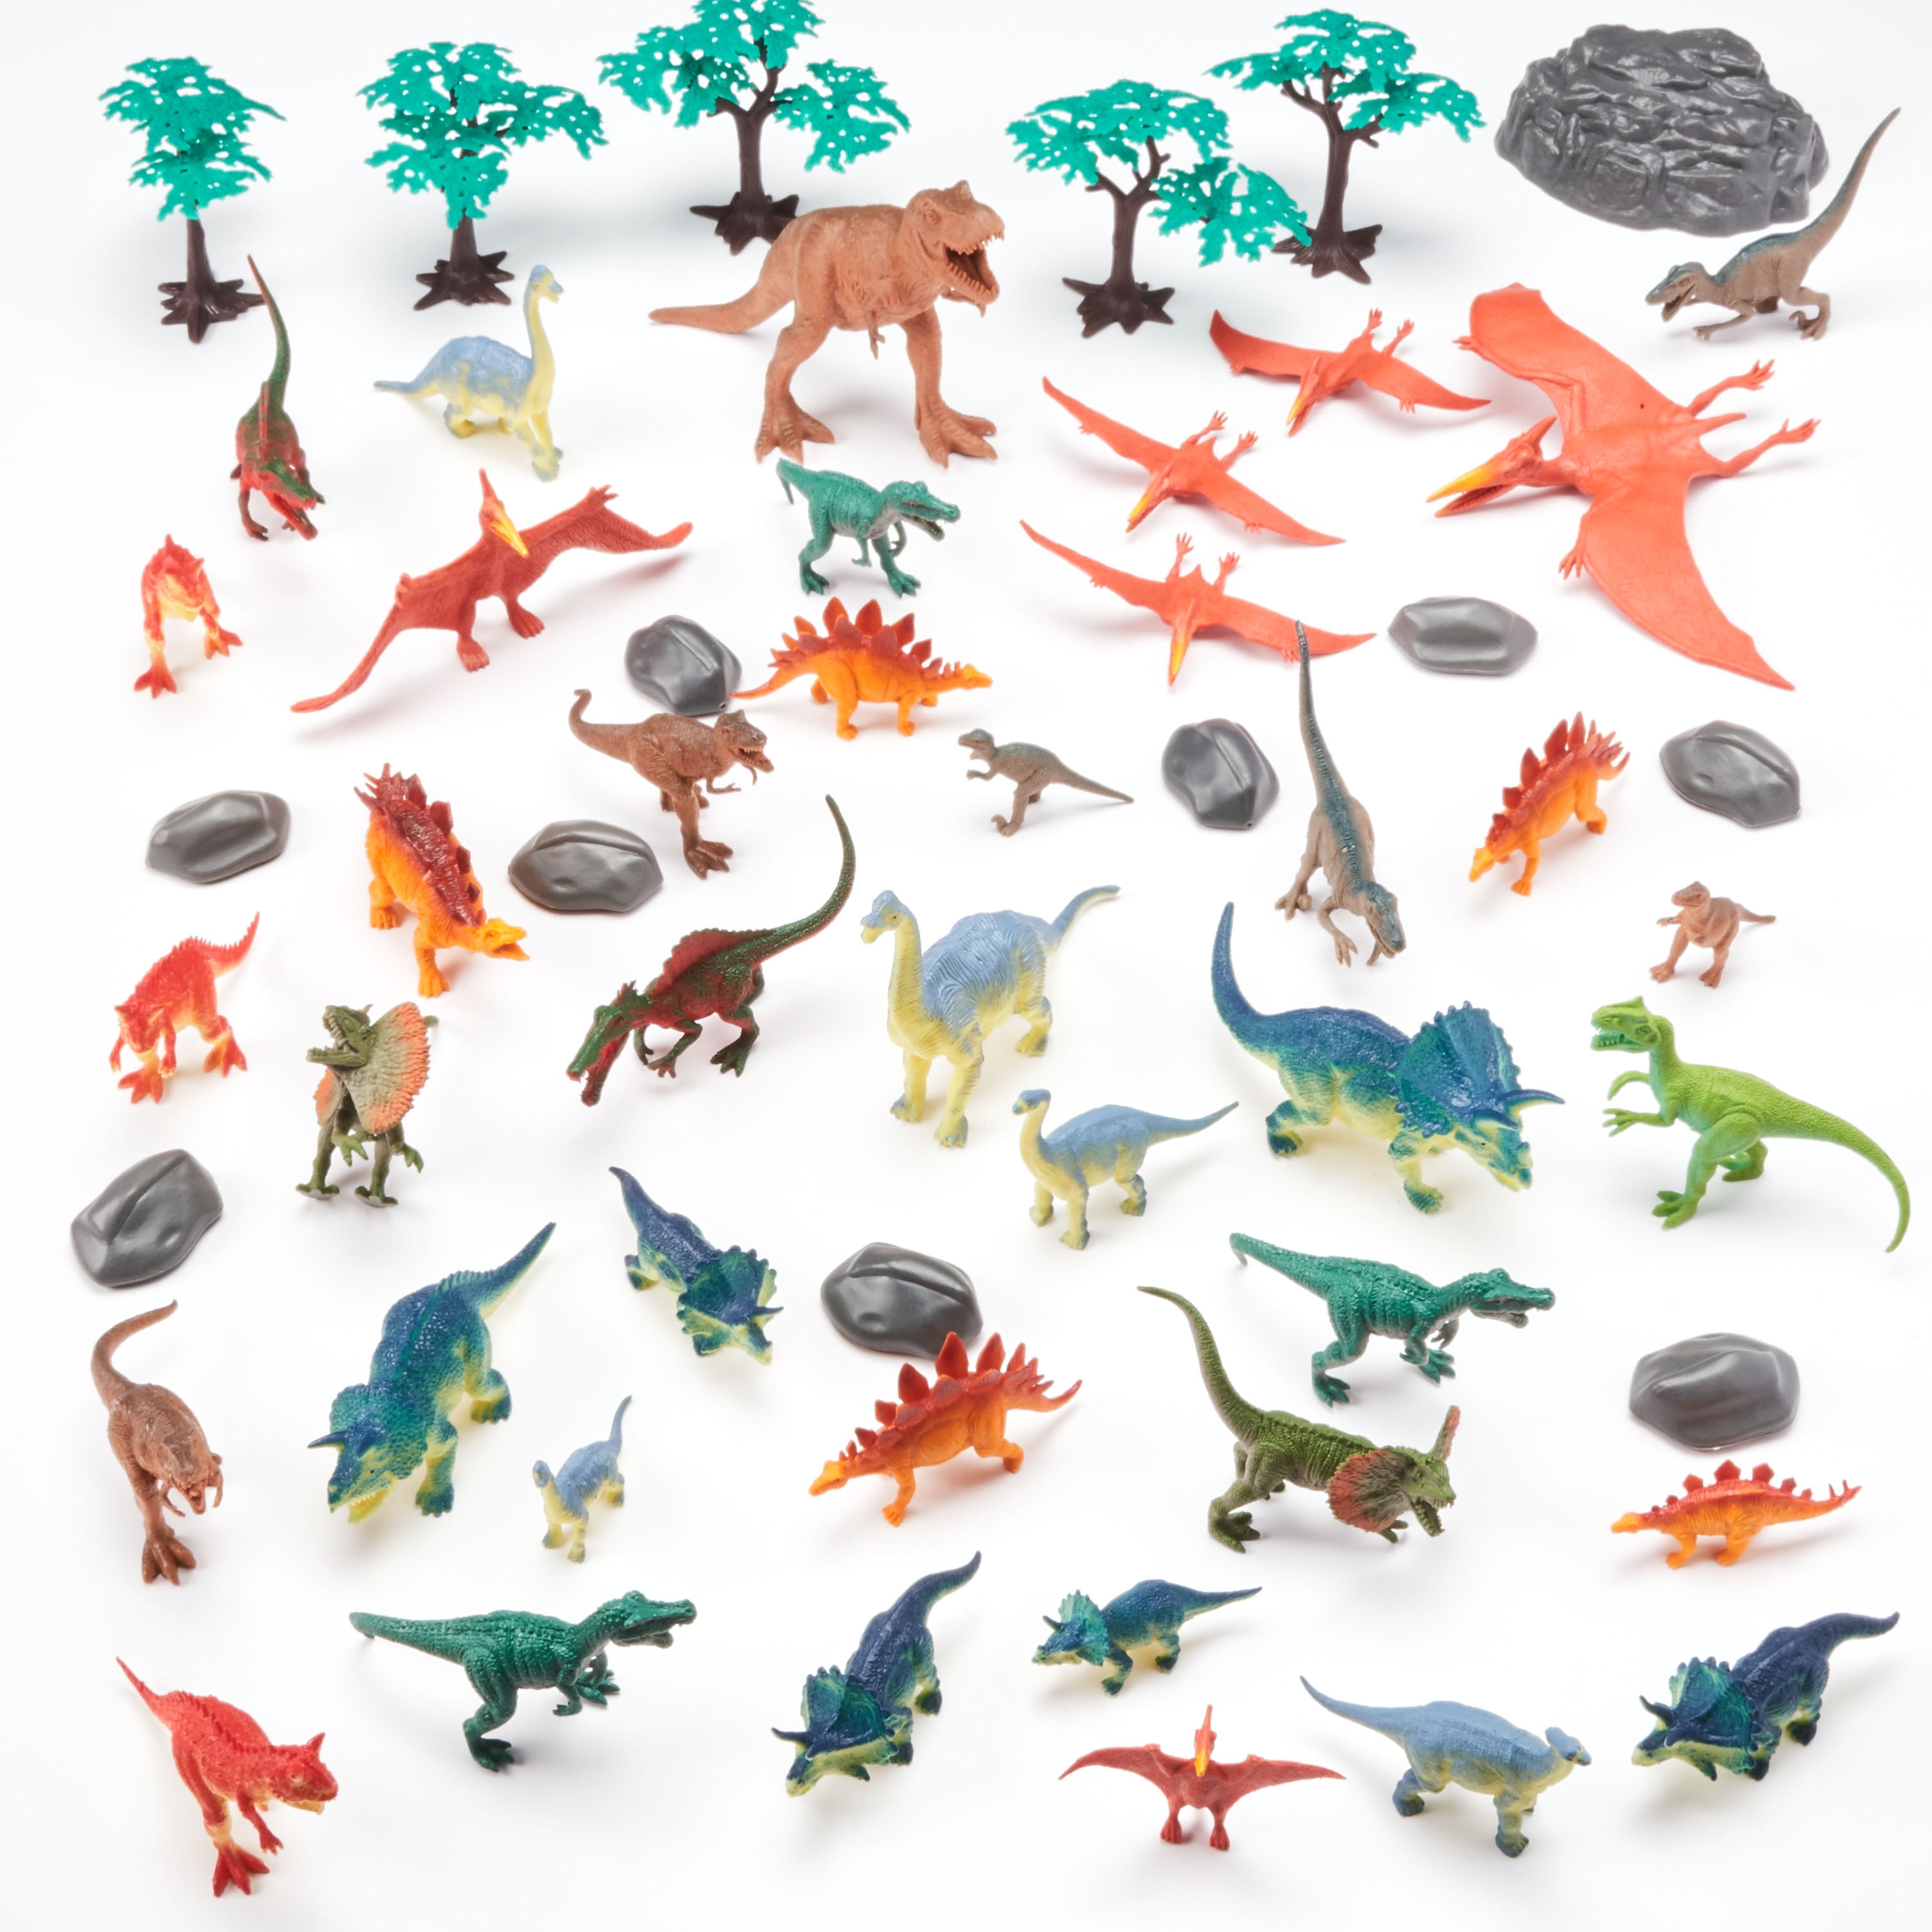 walmart toys dinosaurs